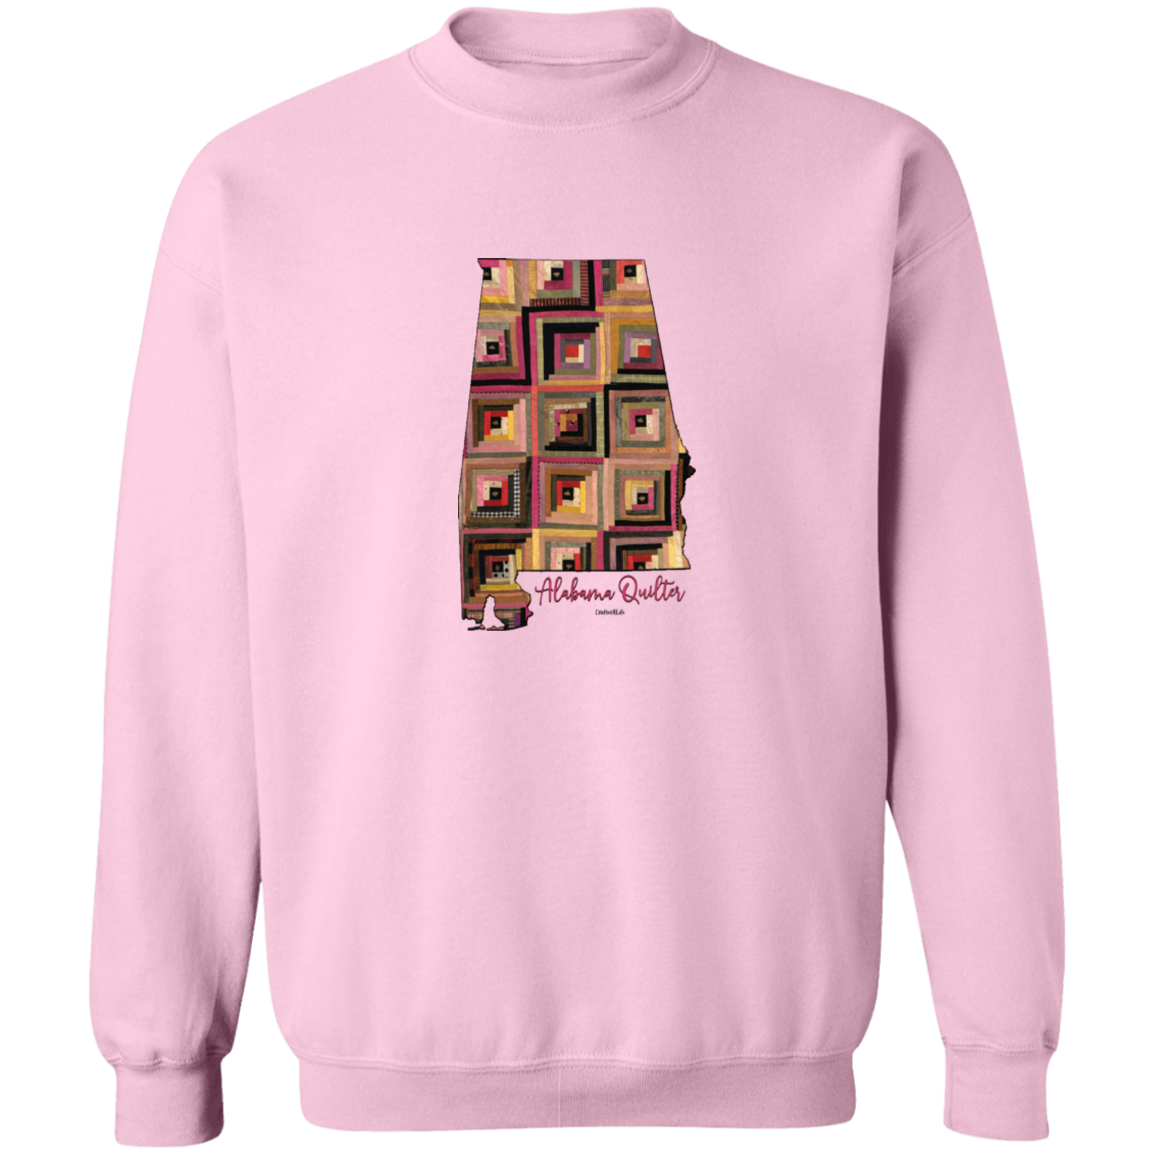 Alabama Quilter Sweatshirt